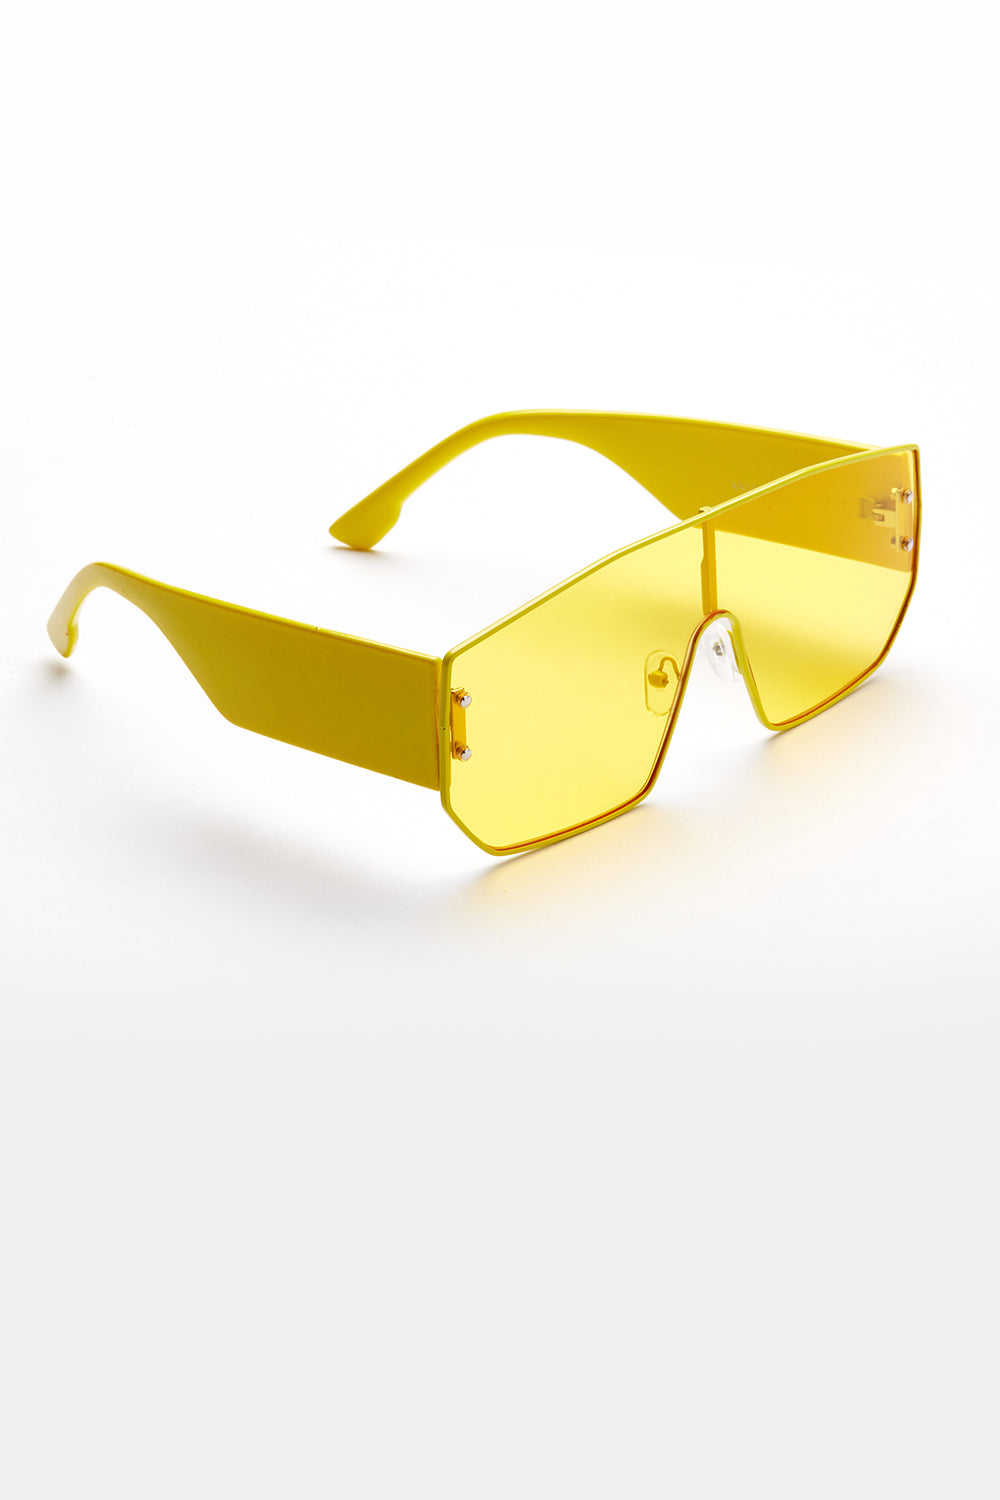 St. Moritz Sunglasses - Slick It Up 